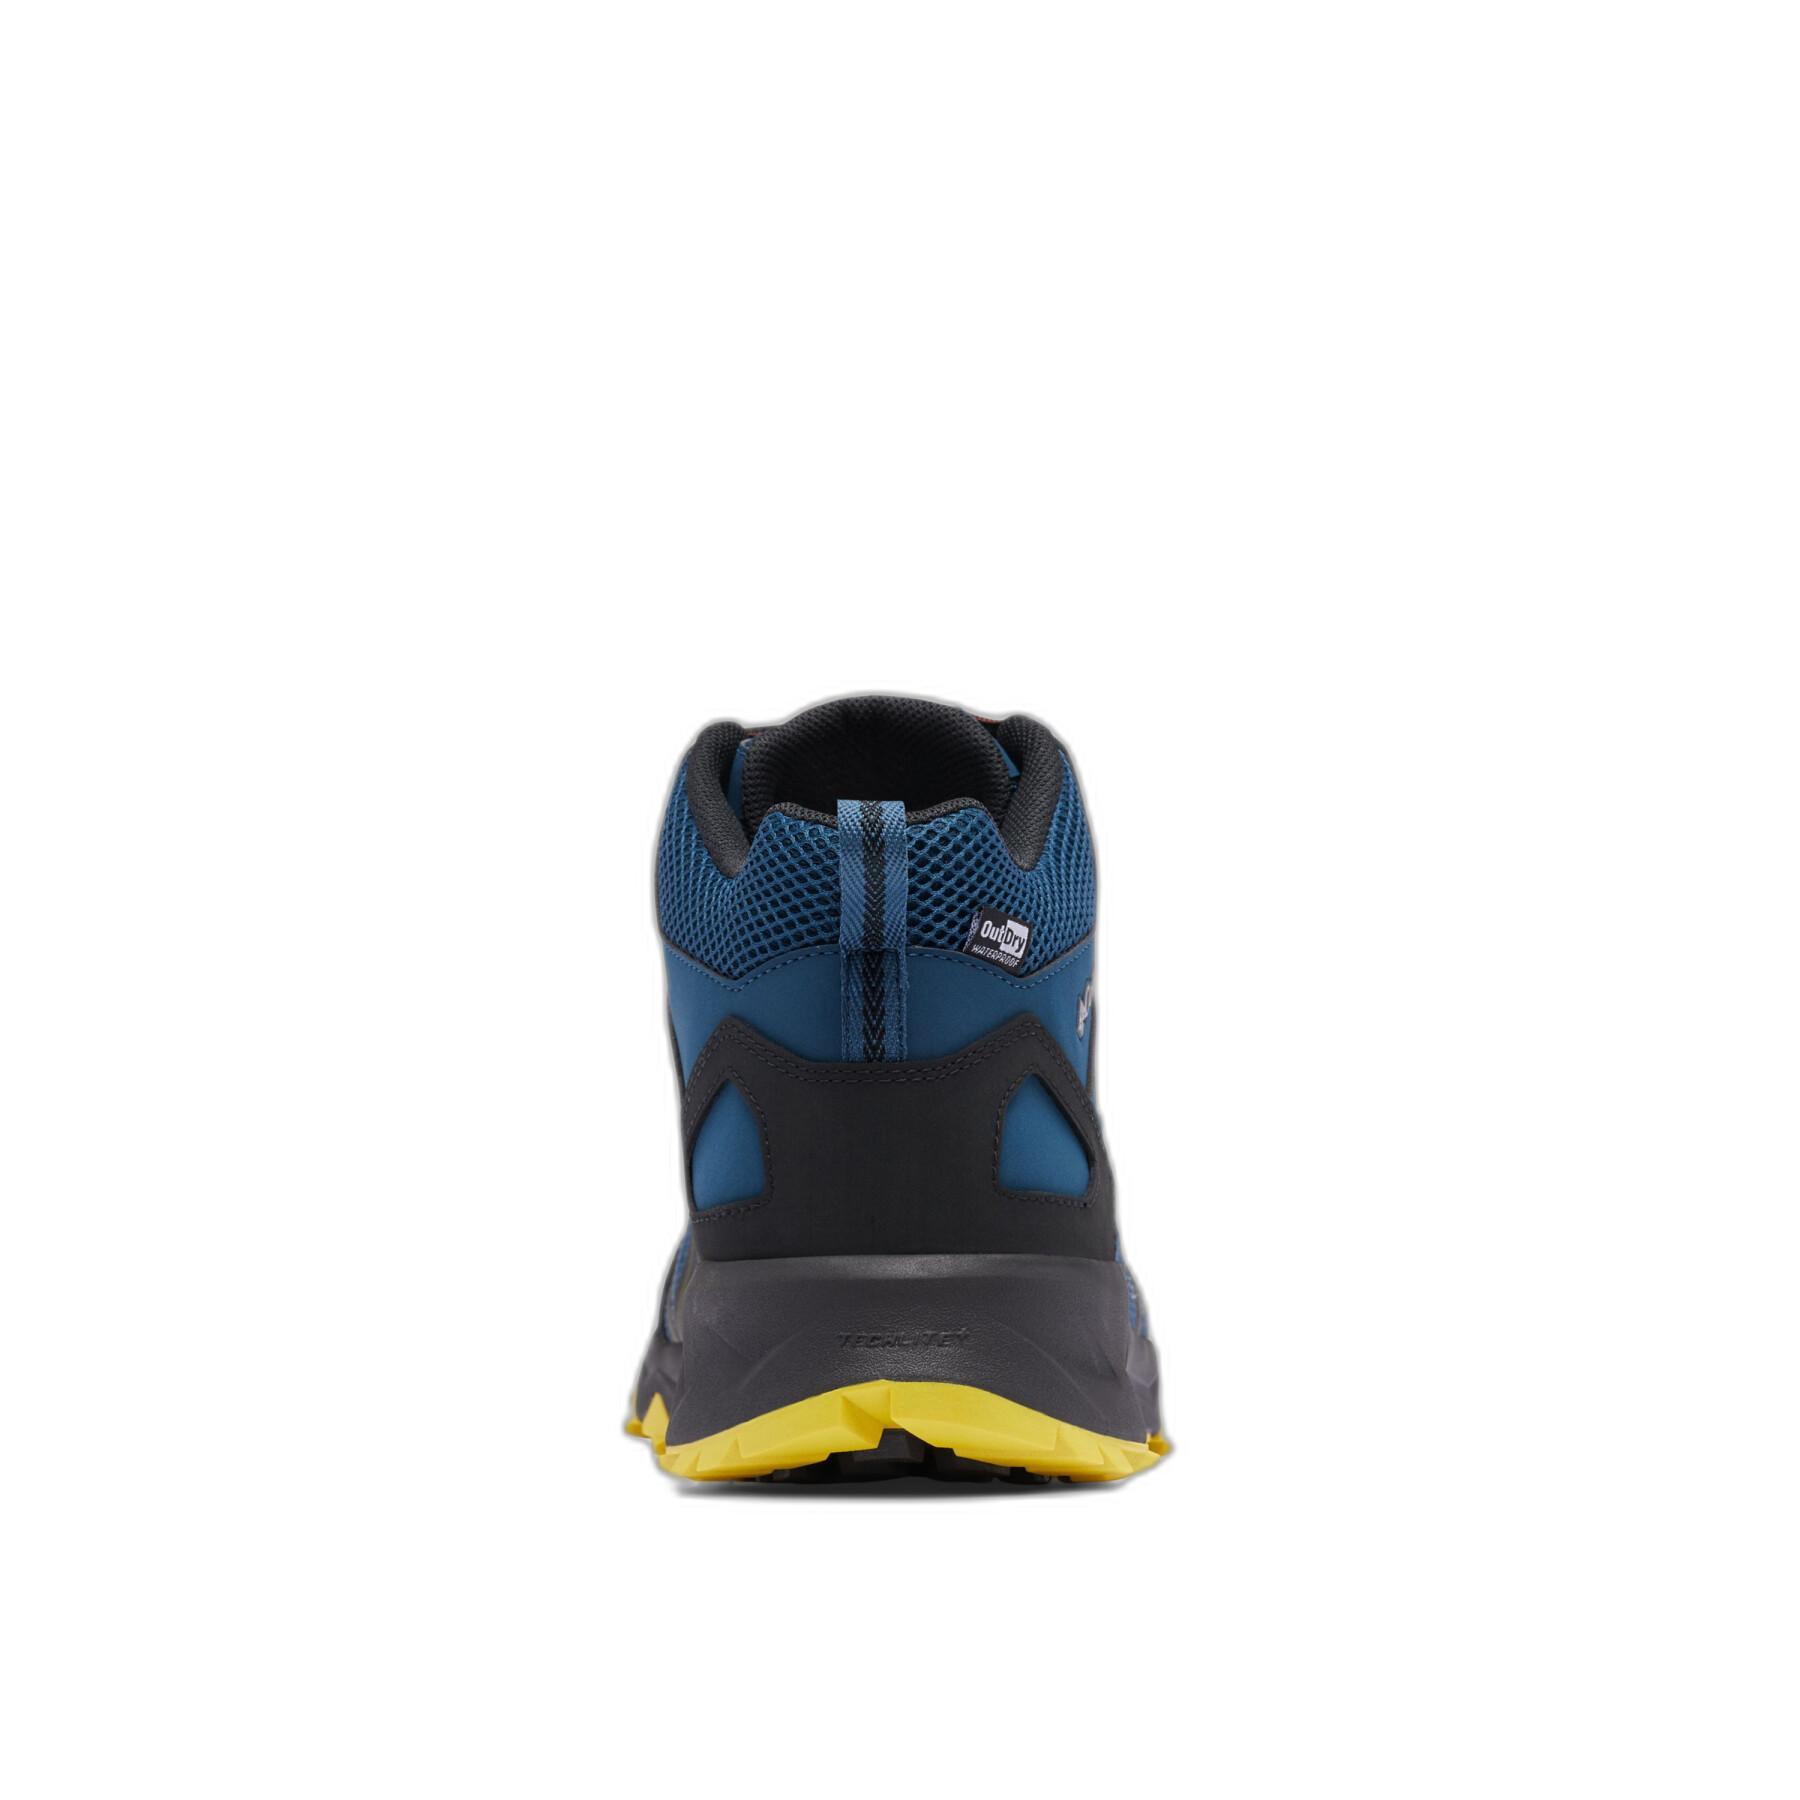 Chaussures de randonnée Columbia Peakfreak™ II Mid Outdry™